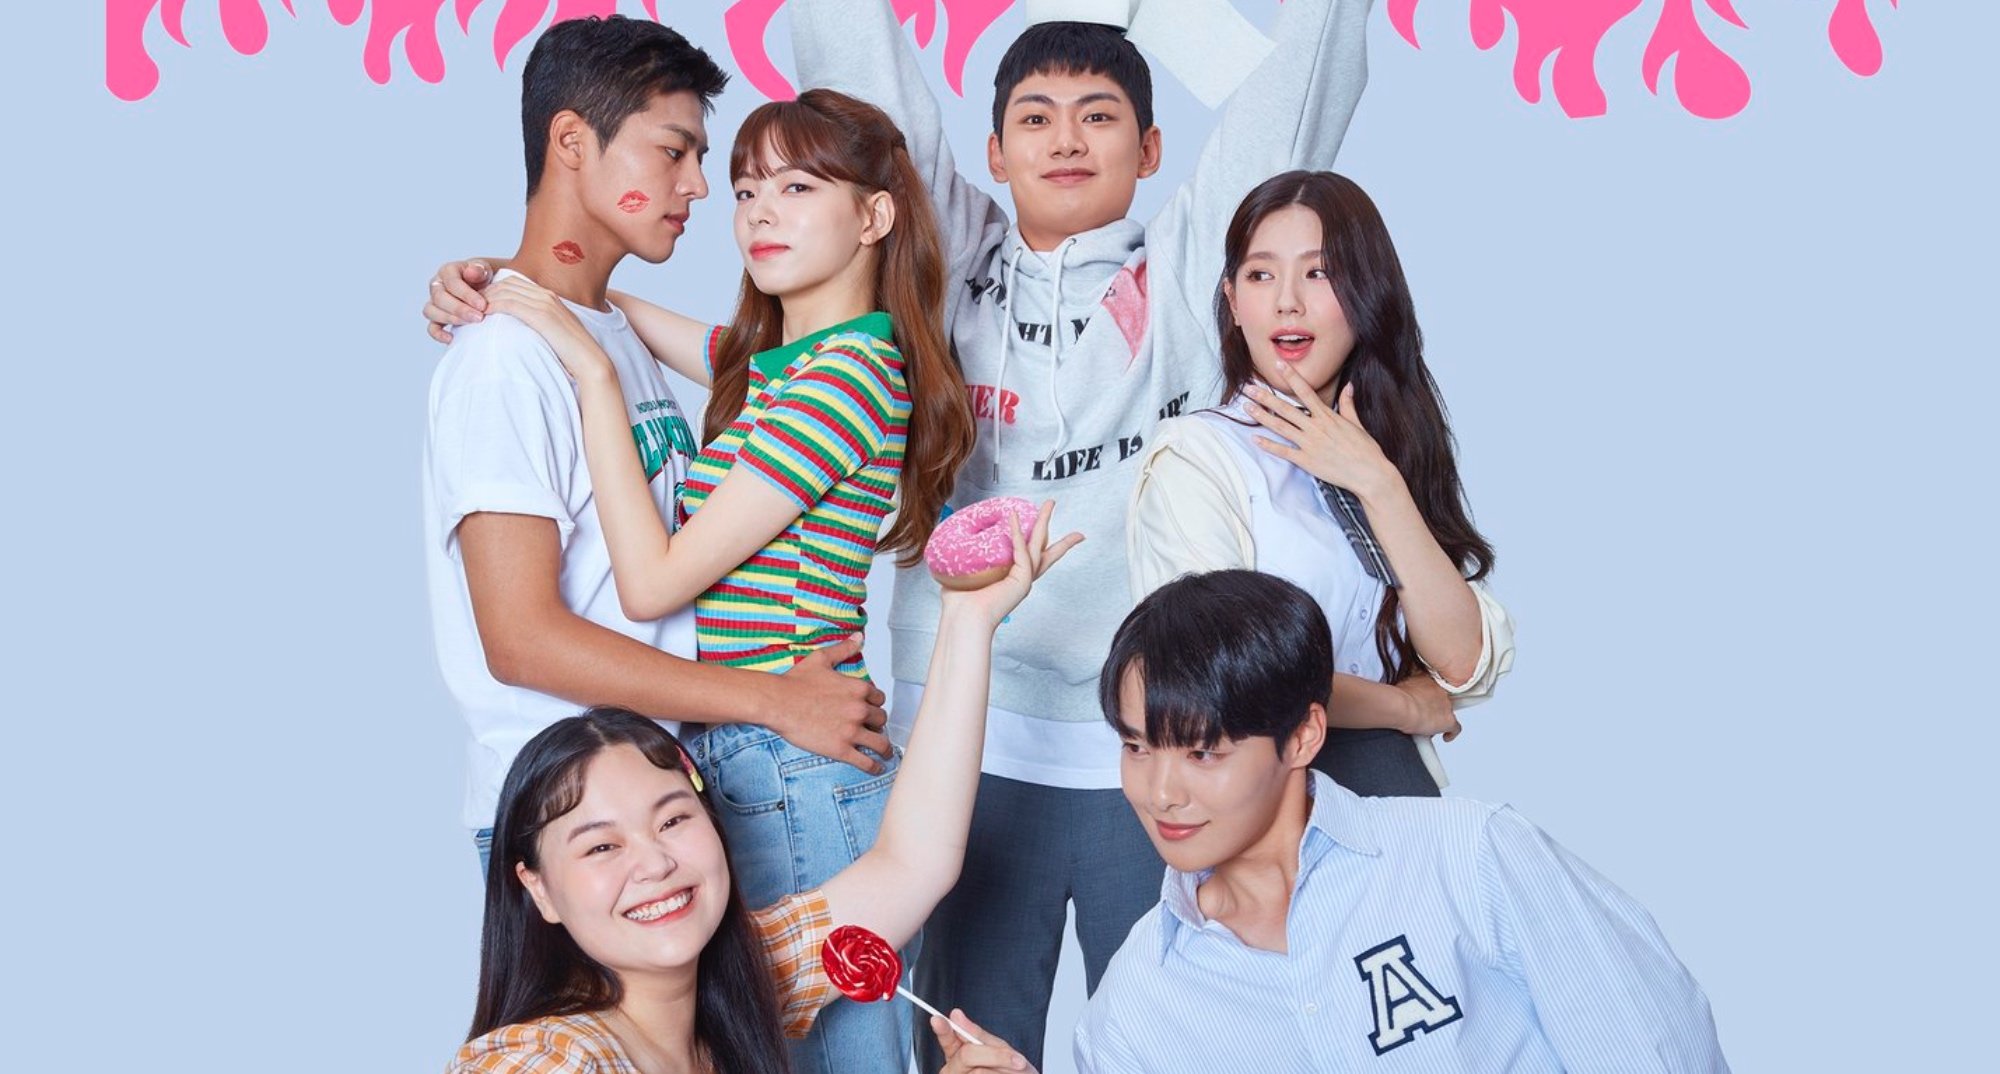 5+ Explicit NSFW K-Dramas That Definitely Earned Their Ratings - Koreaboo